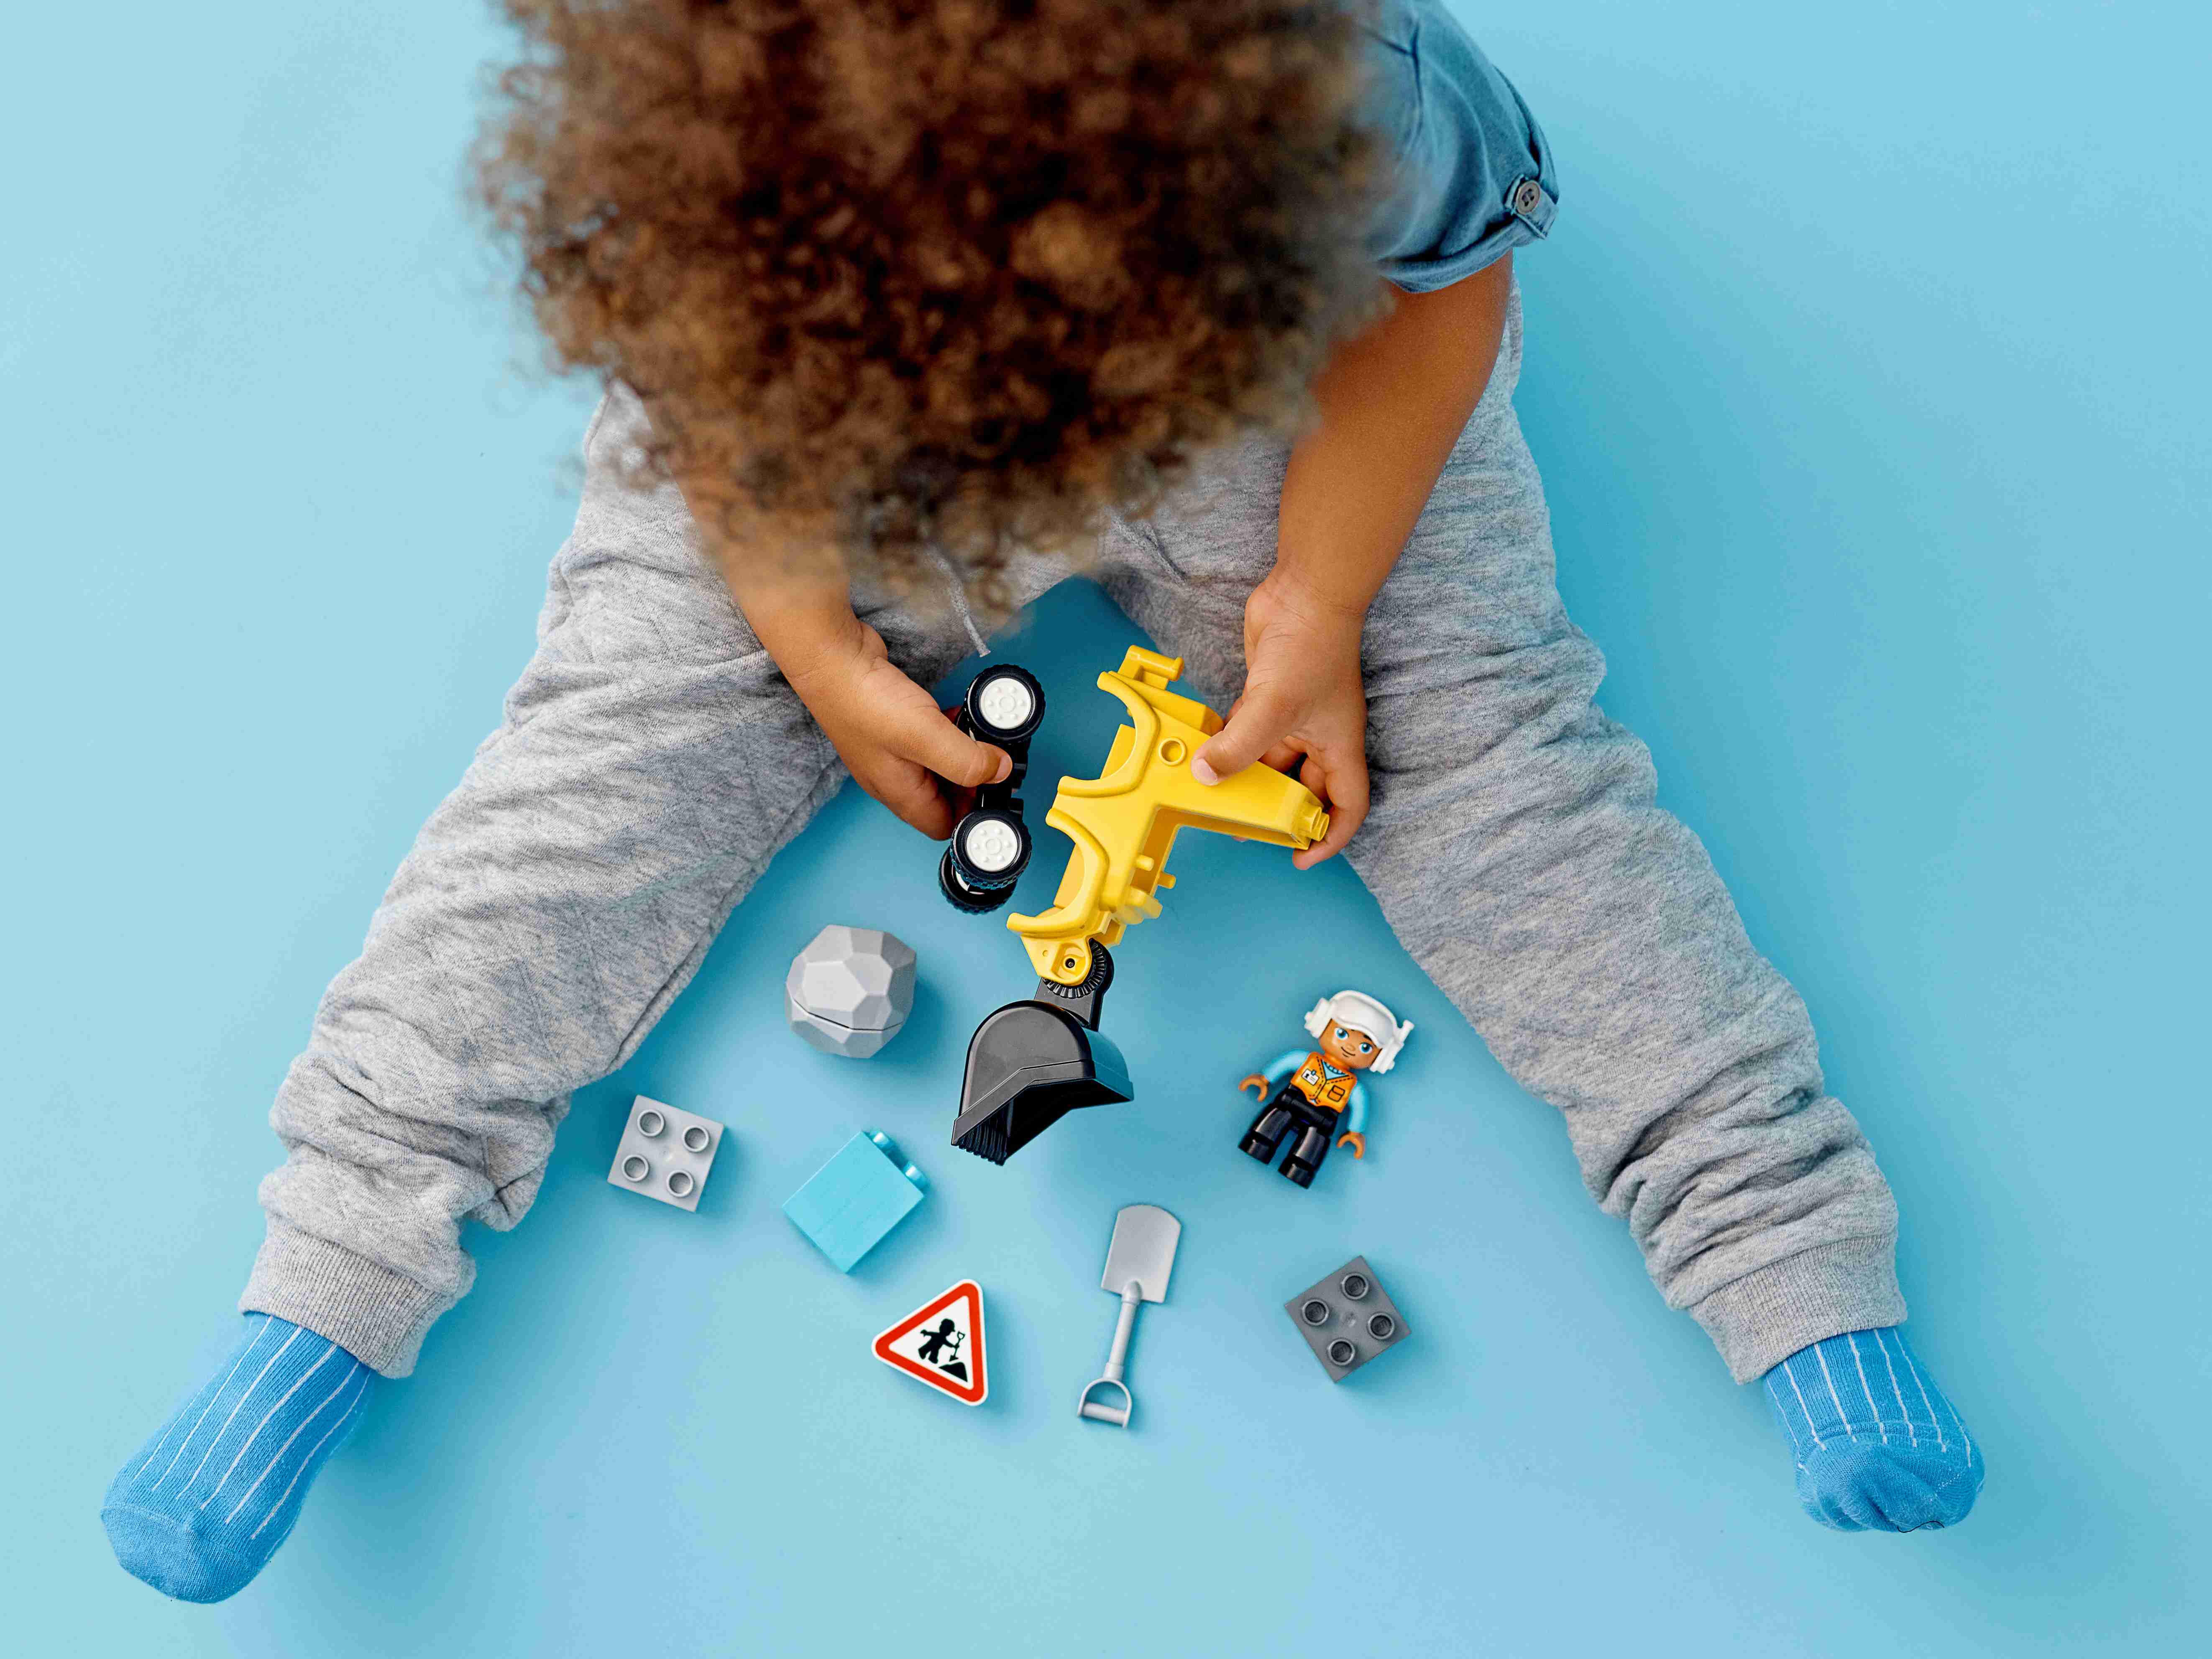 LEGO 10930 DUPLO Radlader, Spielzeug-Set mit Baufahrzeug